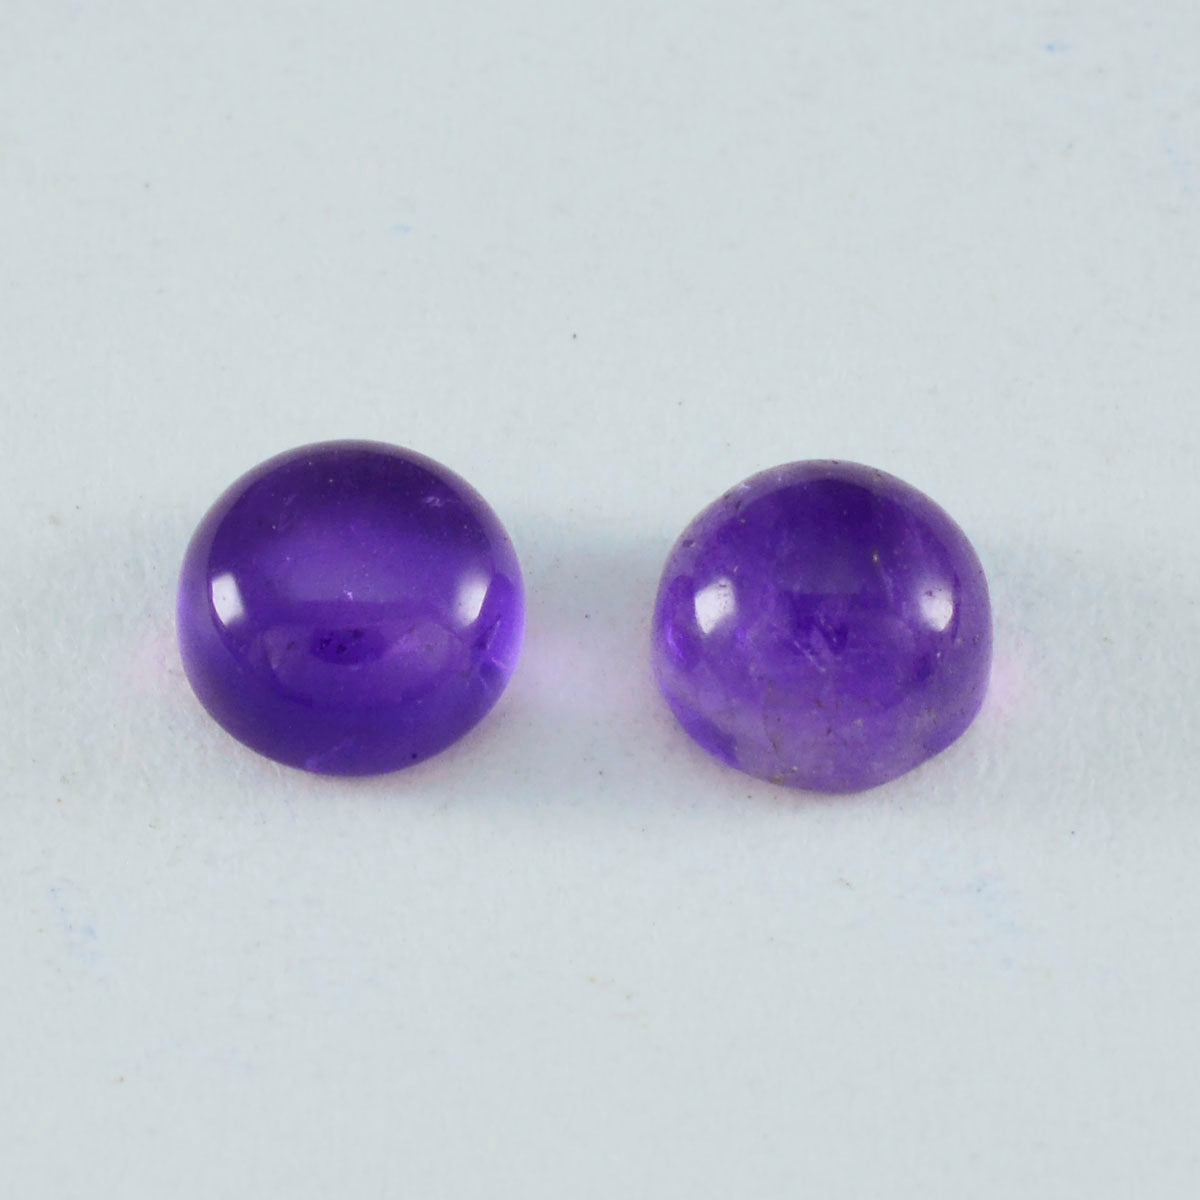 Riyogems 1 pieza cabujón de amatista púrpura 8x8mm forma redonda Linda gema de calidad